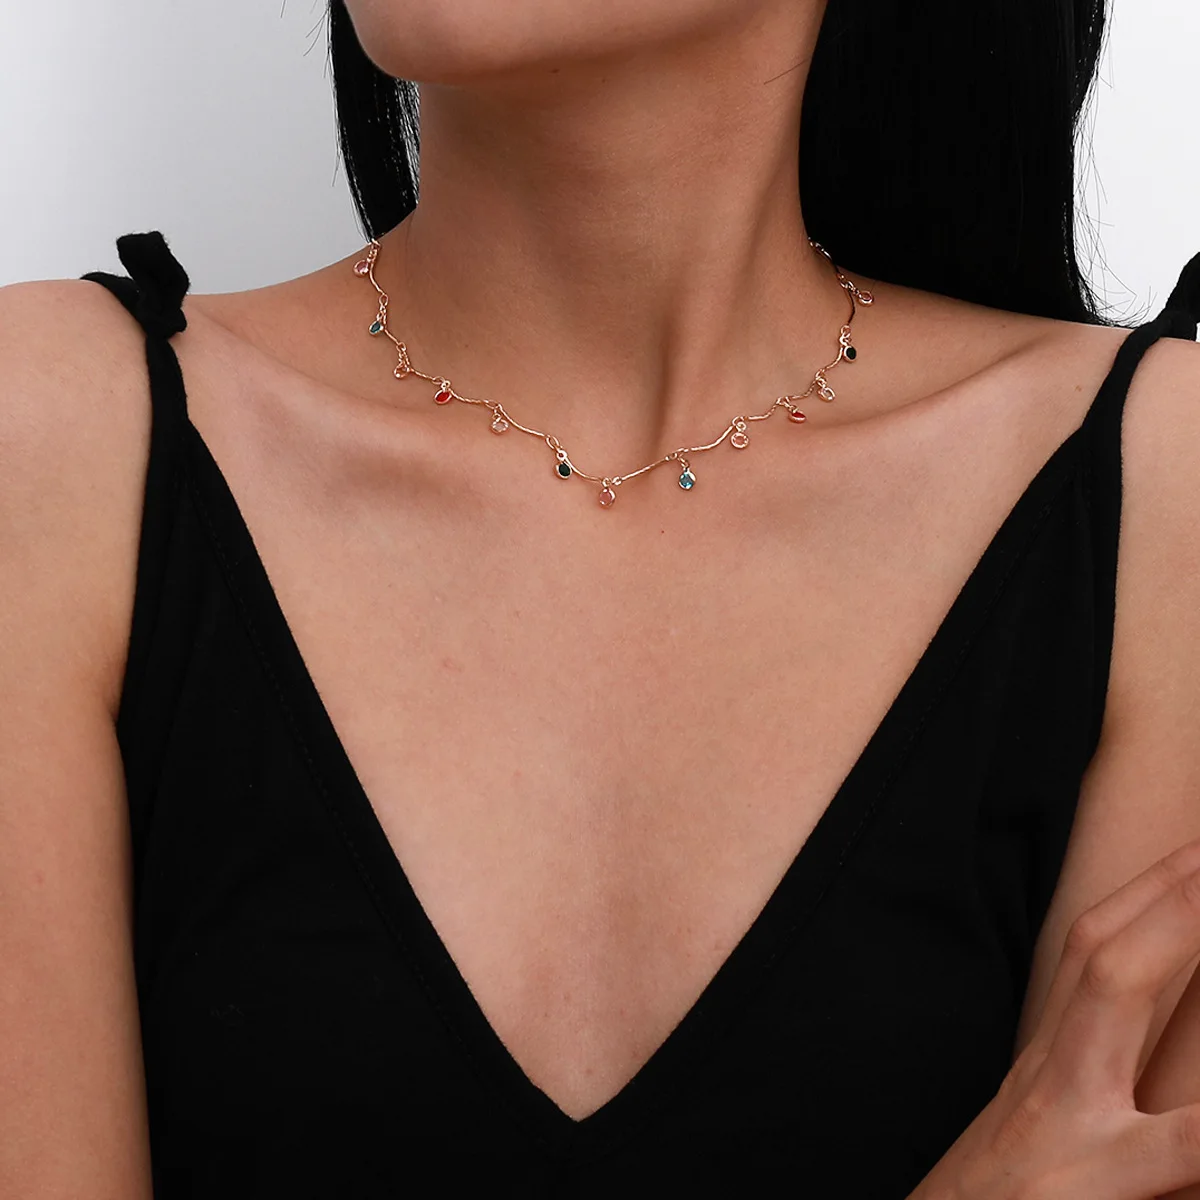 1pcs Simple Fashion Women's Gold Plated Choker Pendant Chain Necklace Jewelry